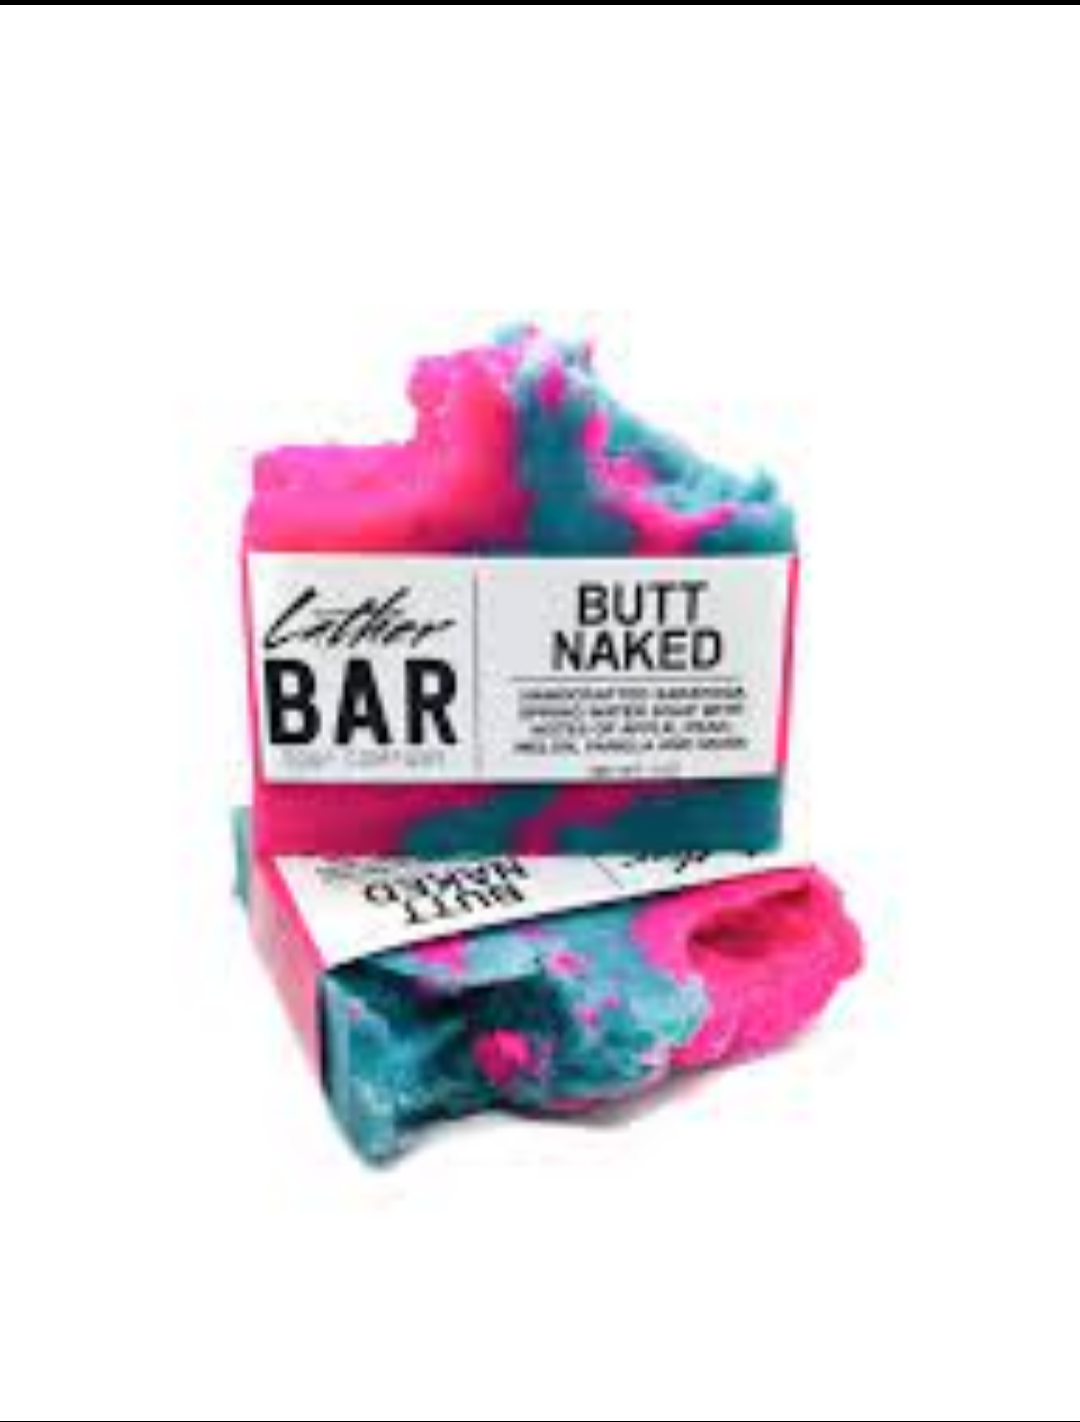 Lather Bar Soap Company Bar Soap